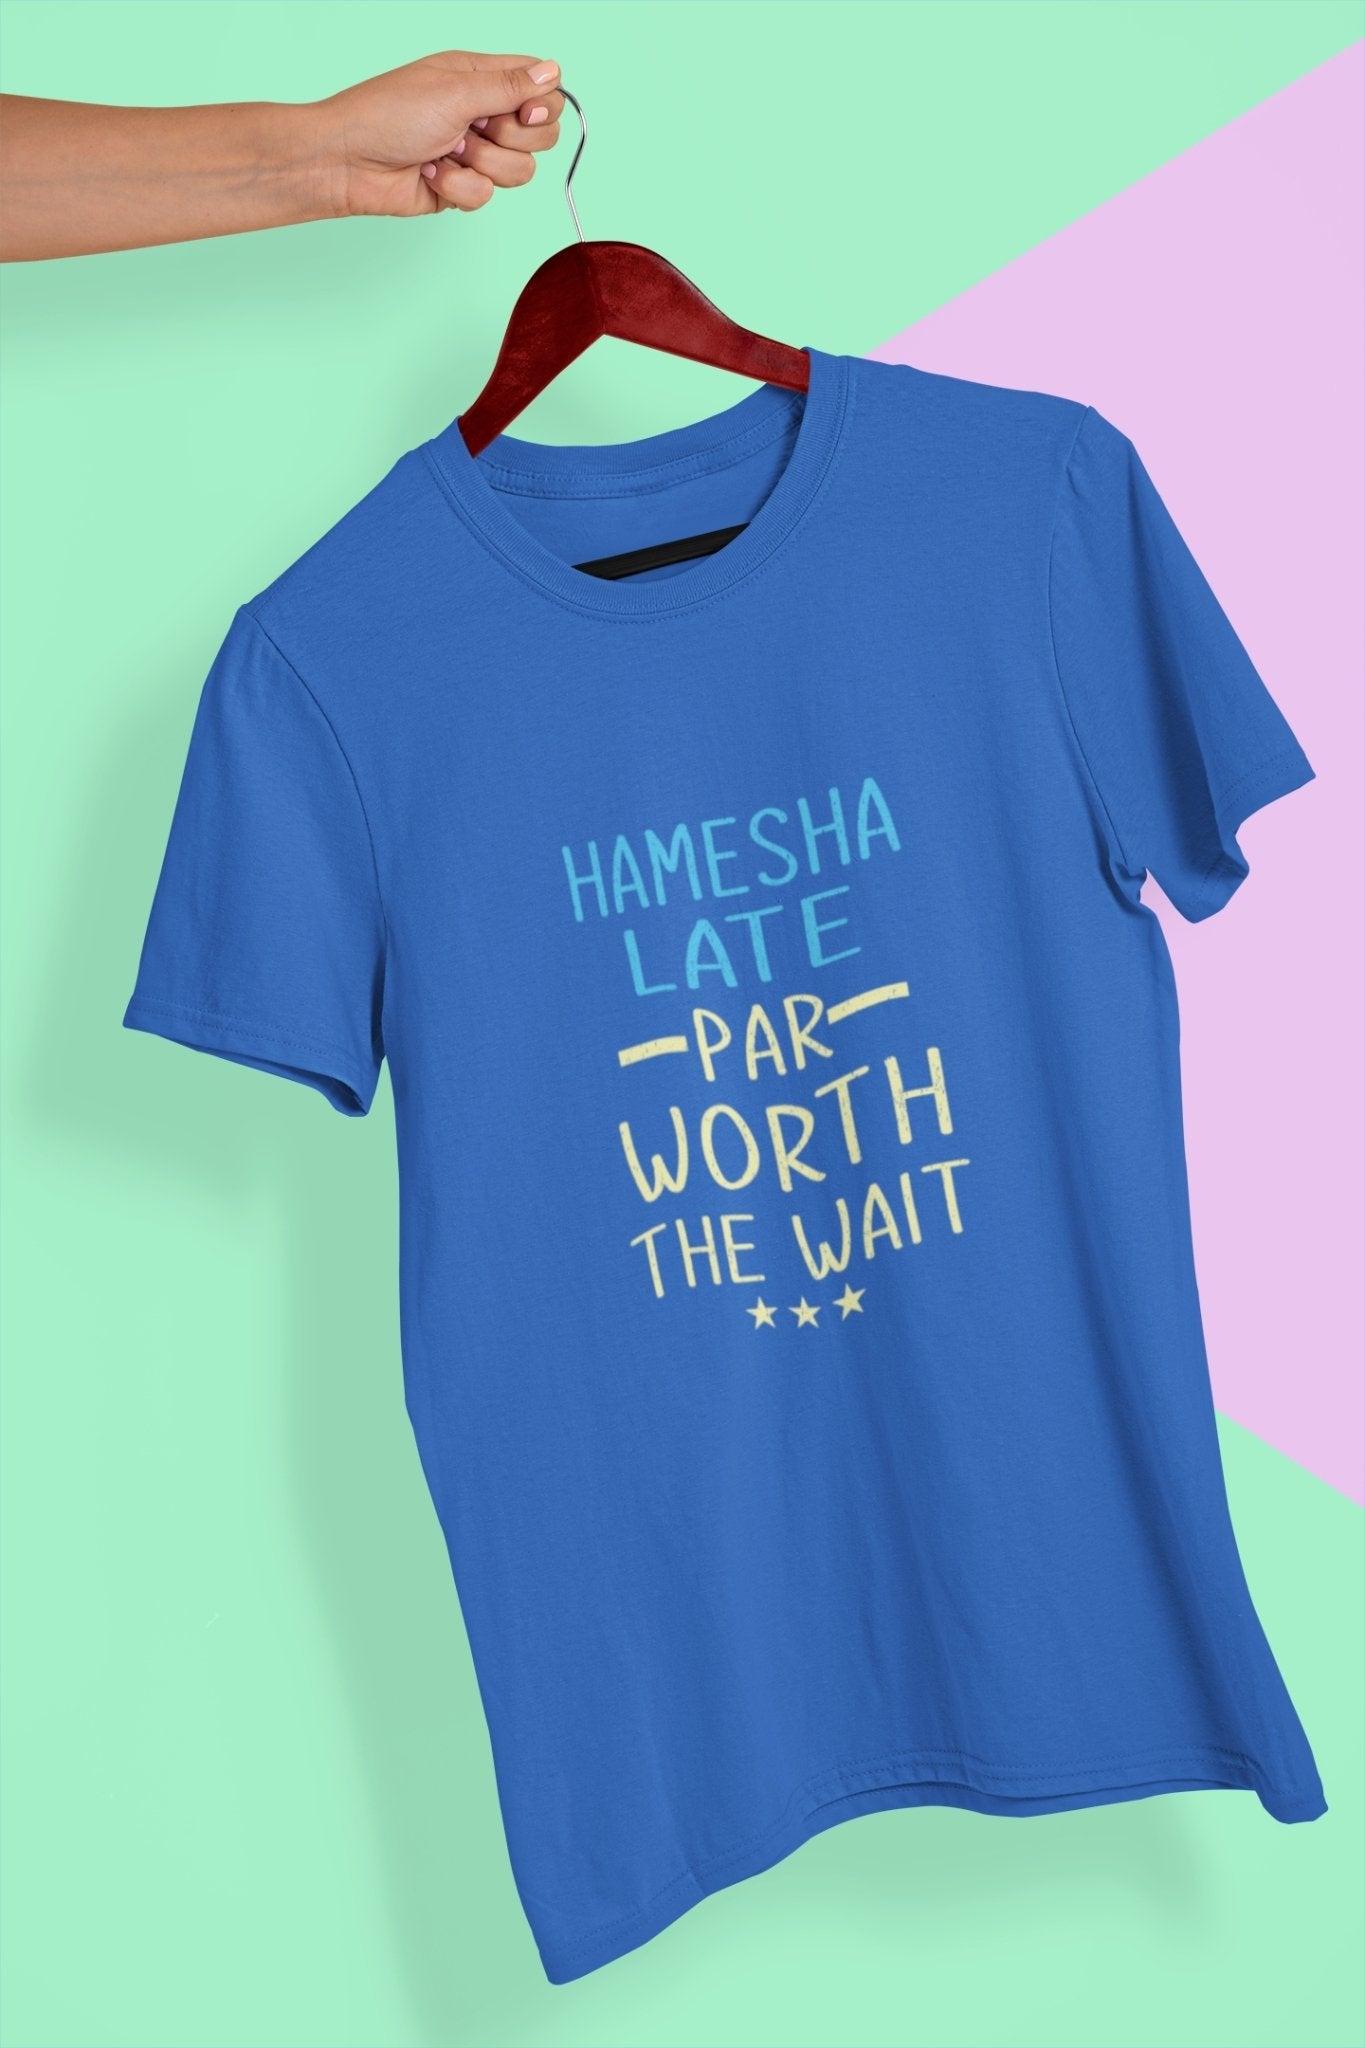 Hamesha Late Par Worth The Wait Typography Women Half Sleeves T-shirt- FunkyTeesClub - Funky Tees Club